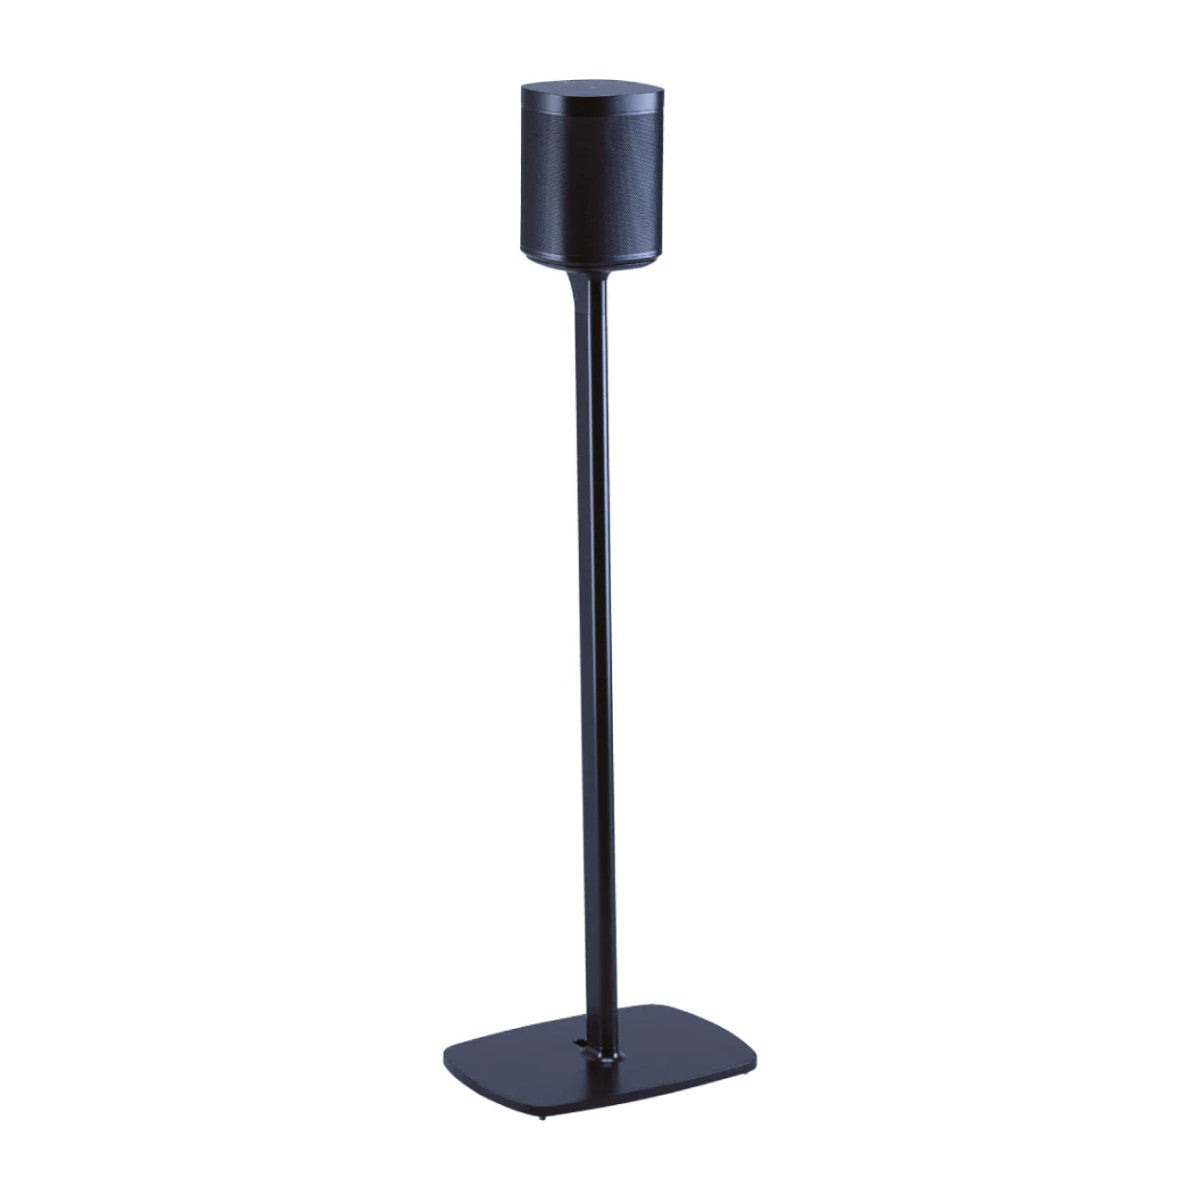 Sonos Flexson Floor Stand for Sonos One / One SL (Each) - Black